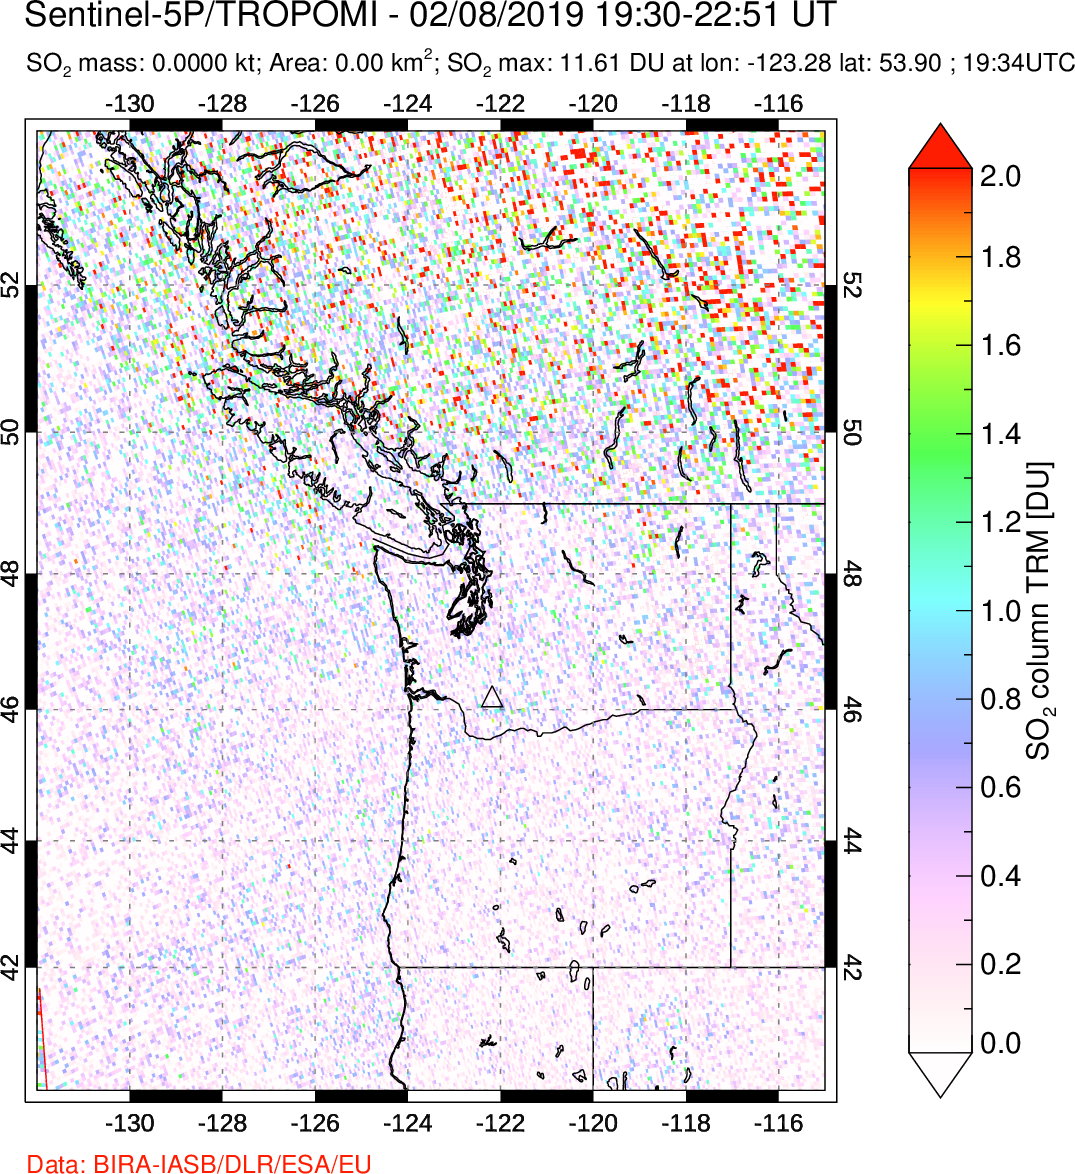 A sulfur dioxide image over Cascade Range, USA on Feb 08, 2019.